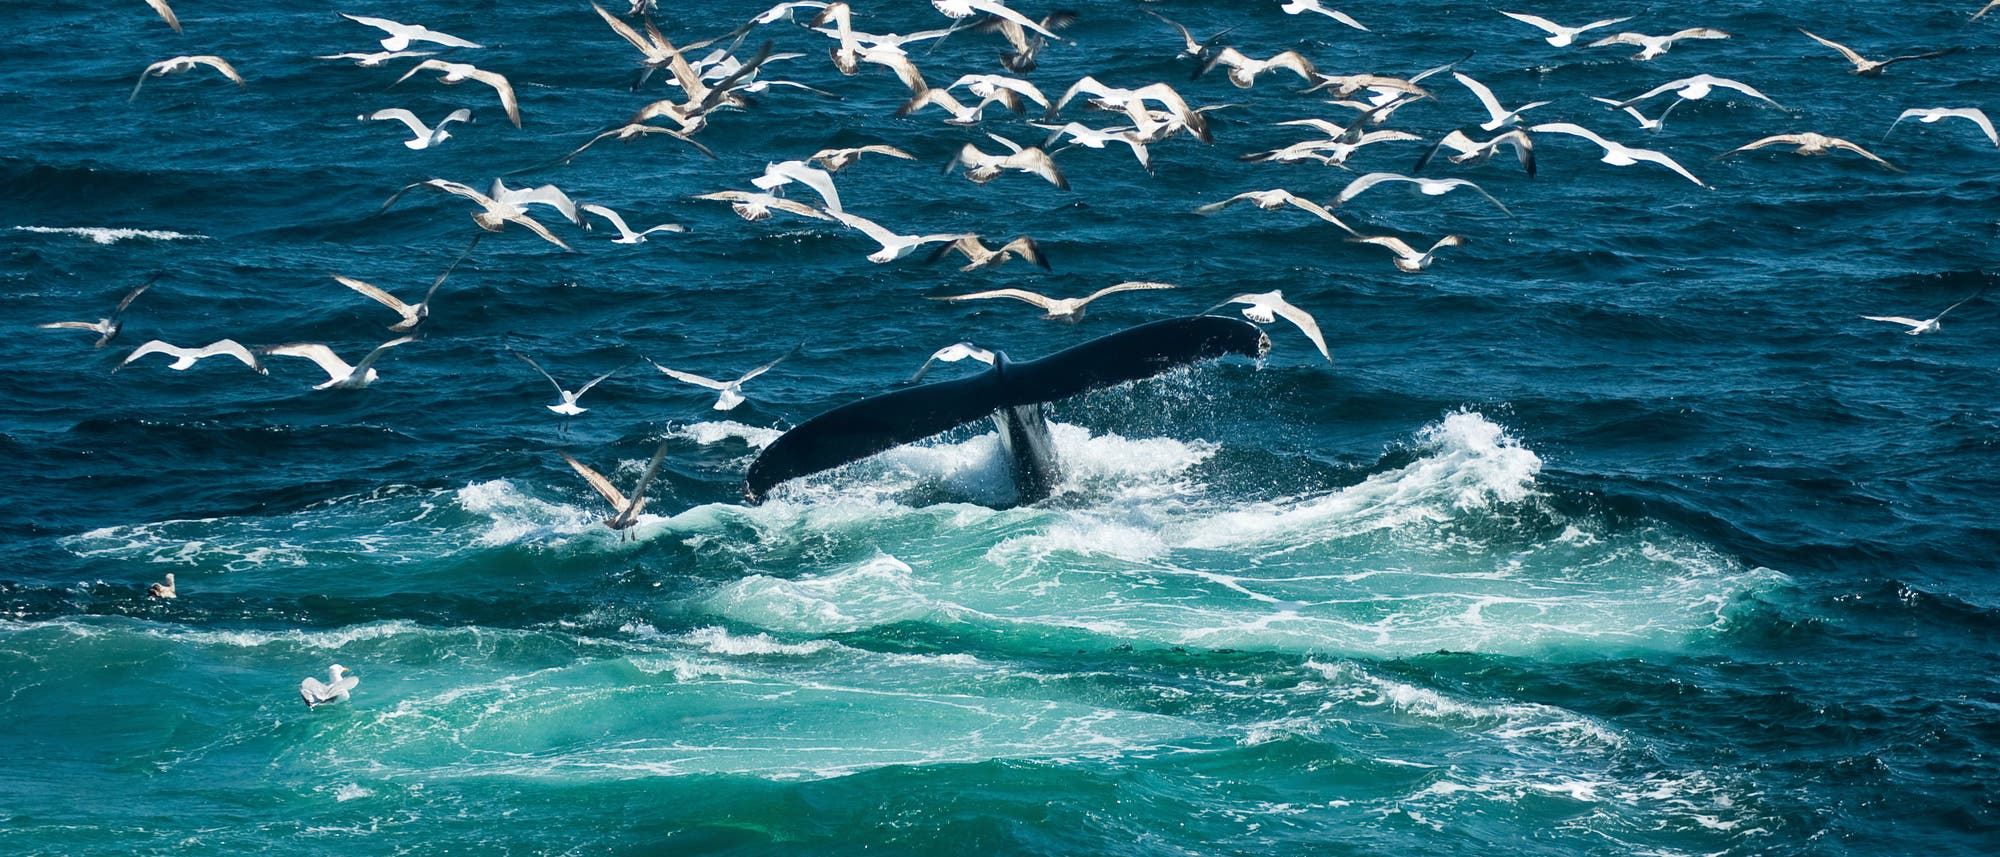 Wale füttern ganze Ökosysteme